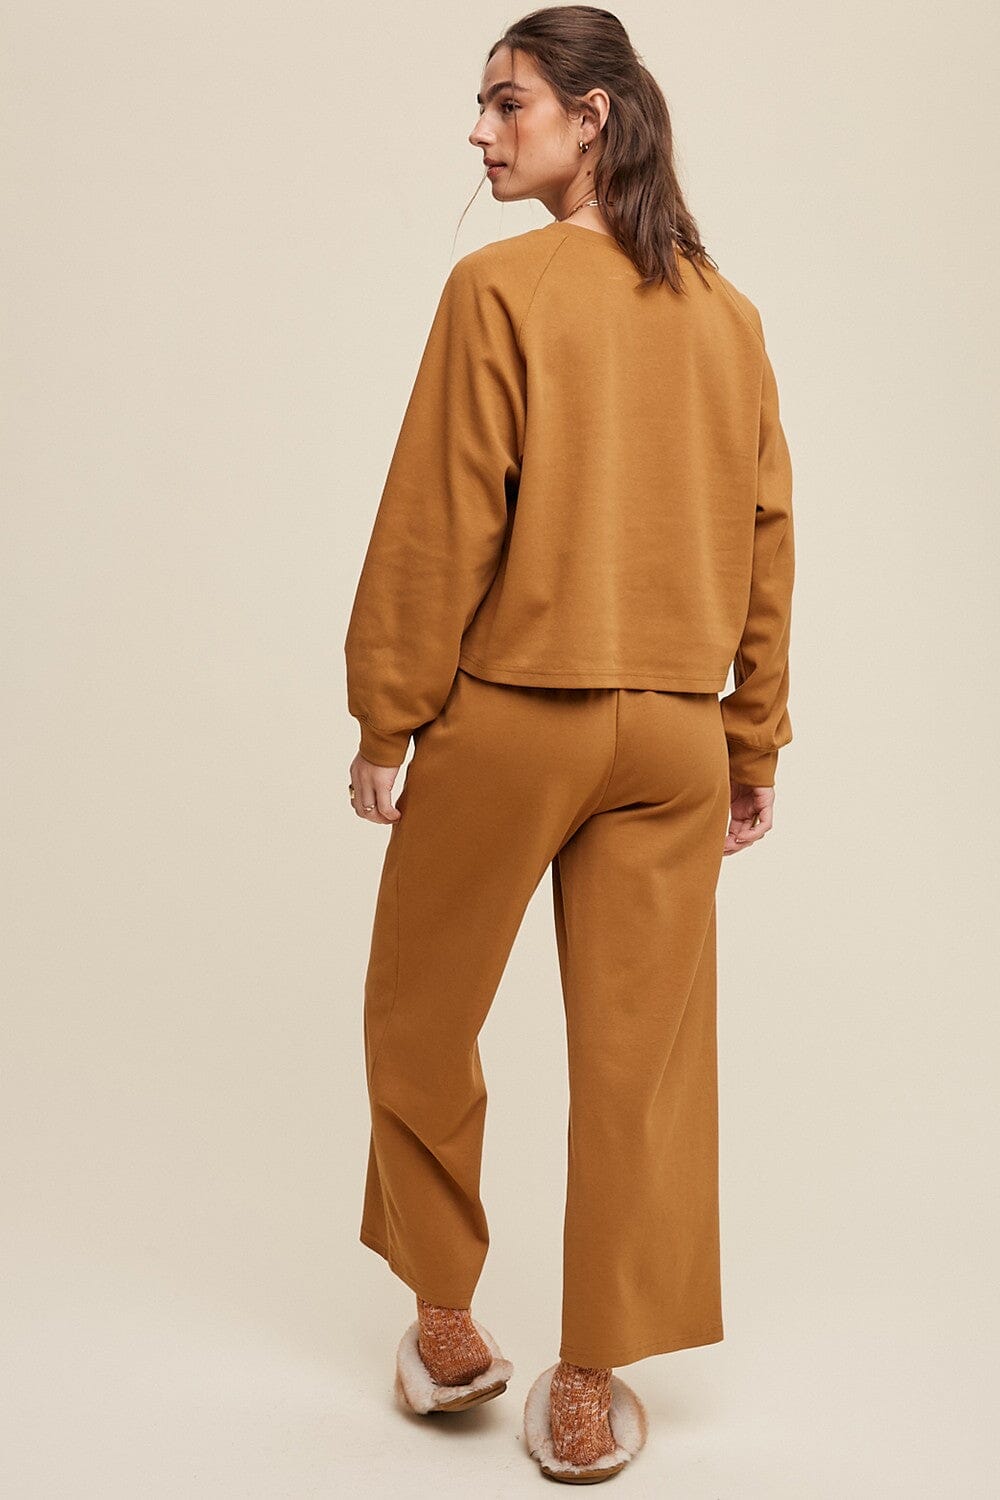 Caramel V-neck Sweatshirt and Pants Set listicle 